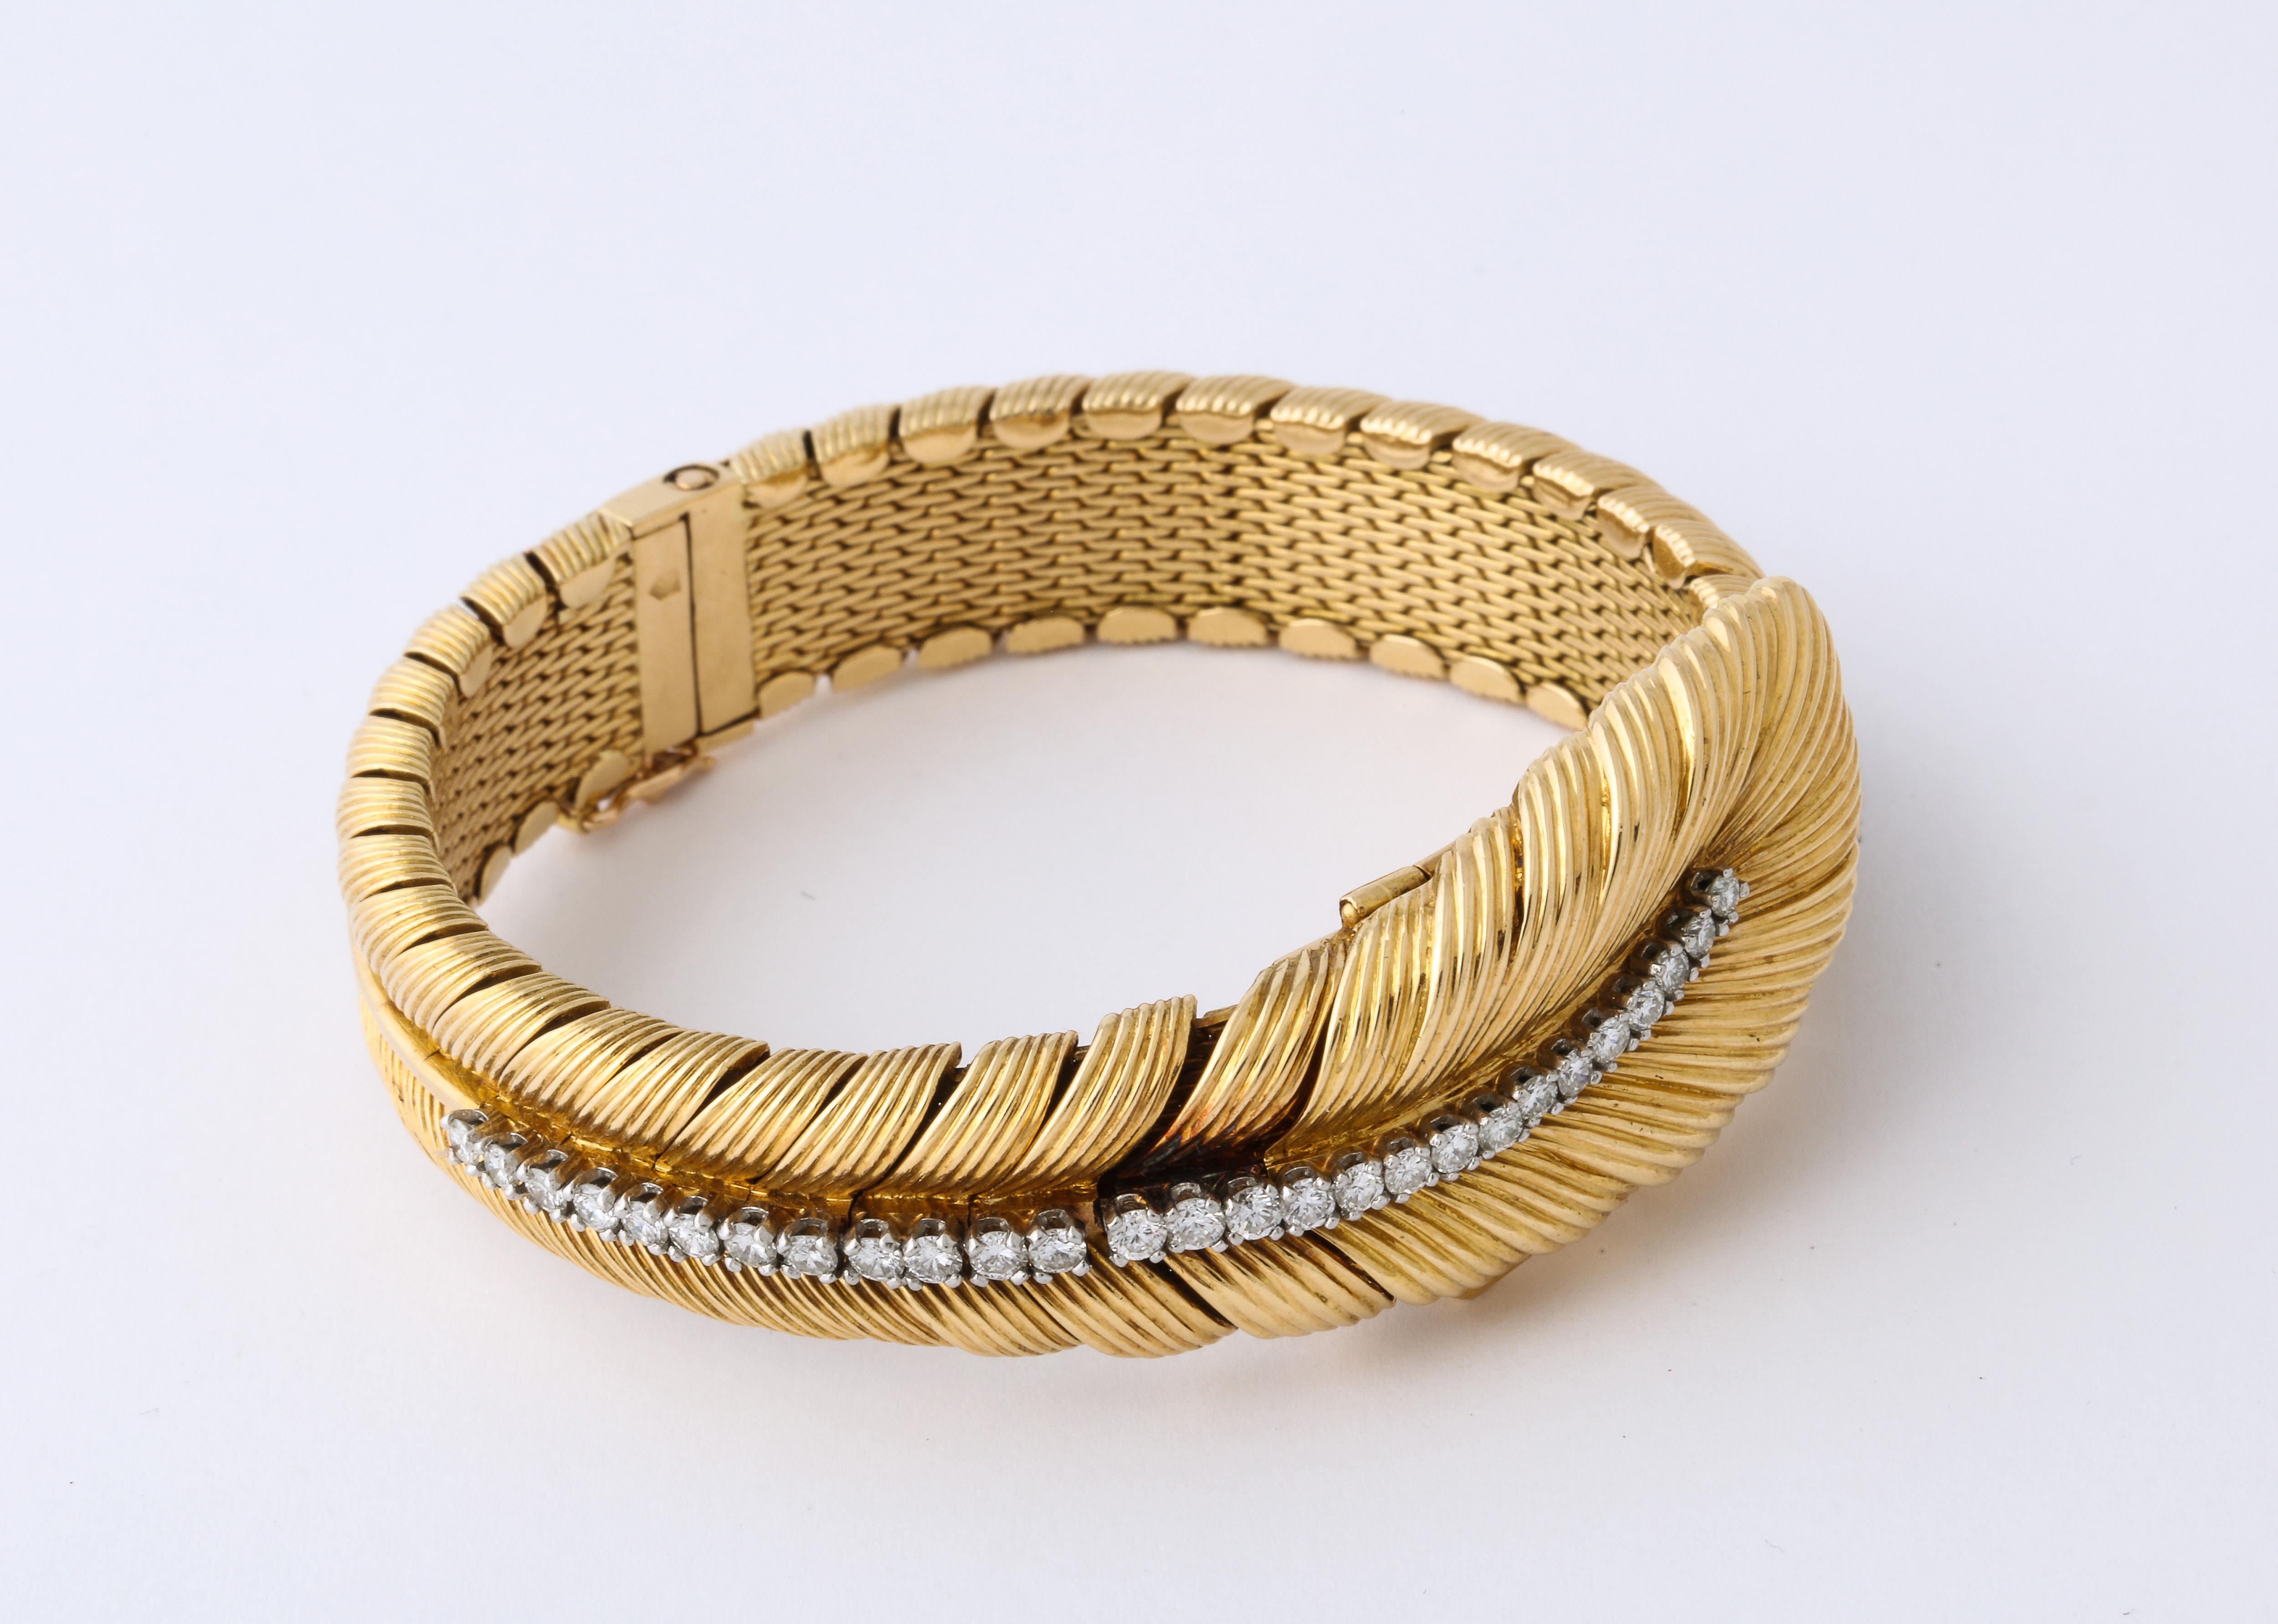 Retro Van Cleef & Arpels Gold Diamond Bracelet Watch with Original Box Foliate Design